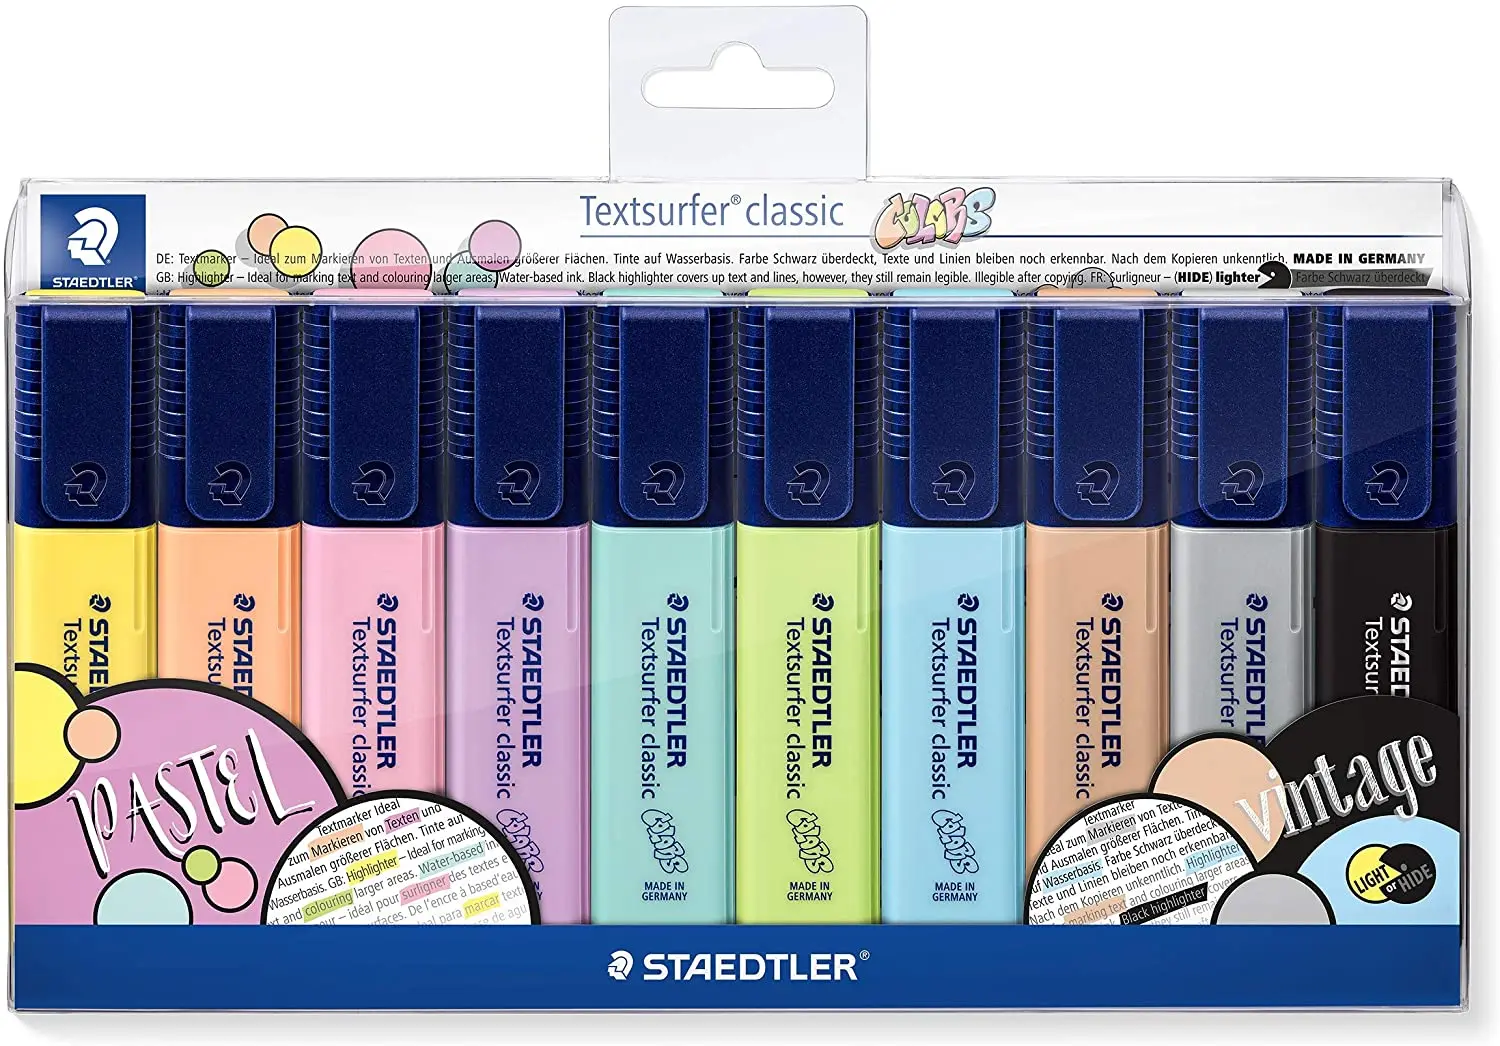 Staedtler Textsurfer Classic 364 Pack de 10 Marcadores Fluorescentes - Secado Rapido - Trazo 1 - 5mm